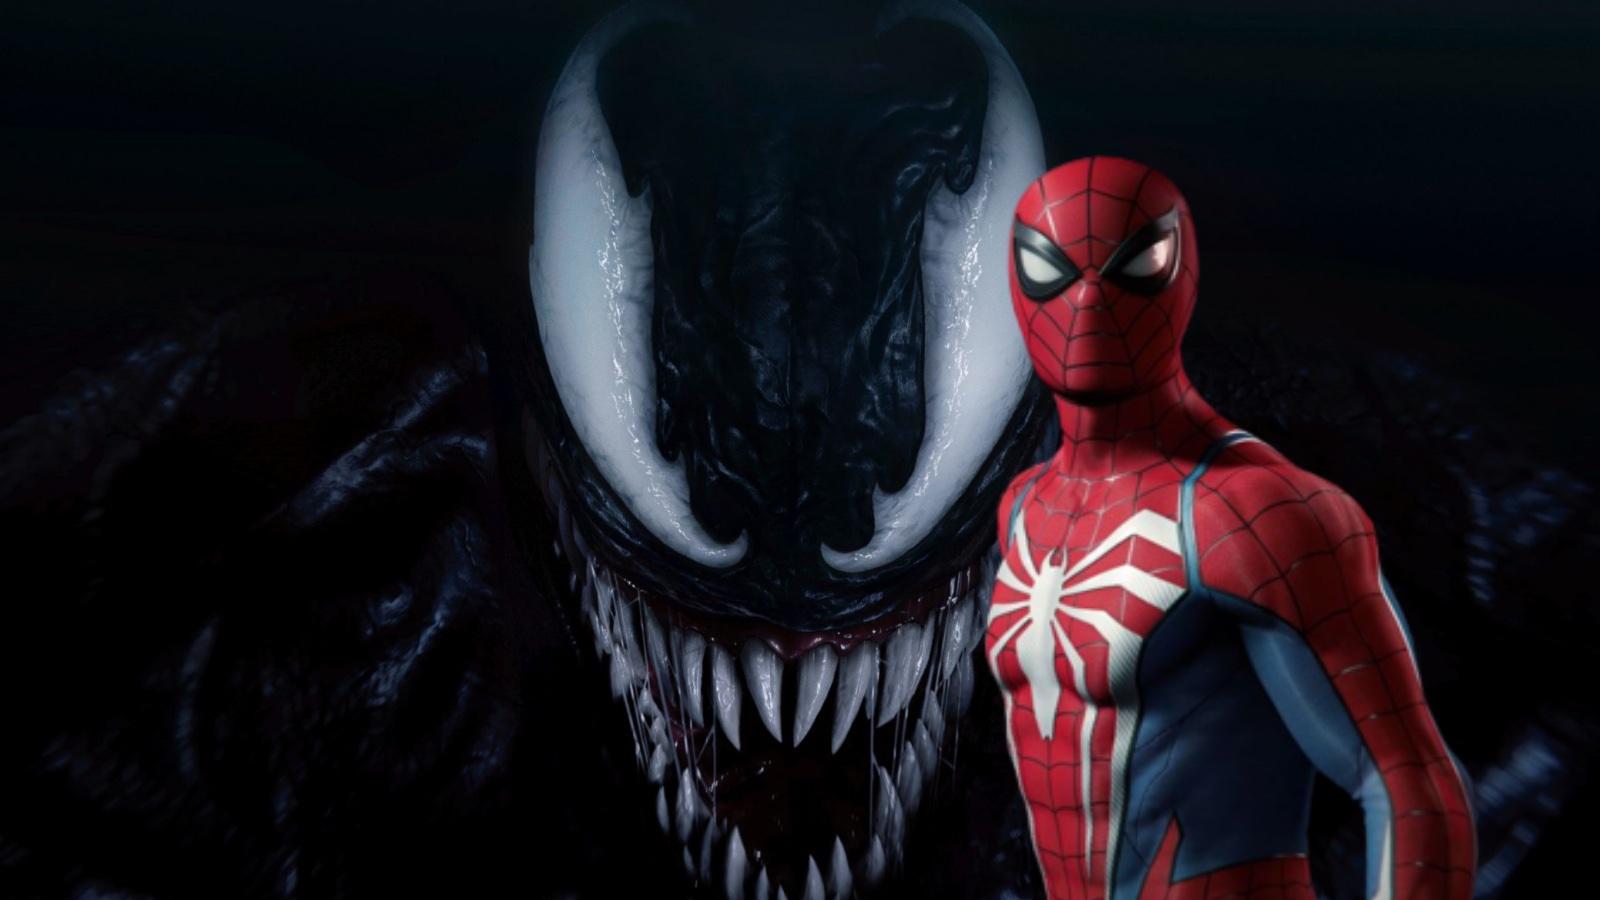 Spider-Man 2's Venom voice actor hints at September release - Dexerto